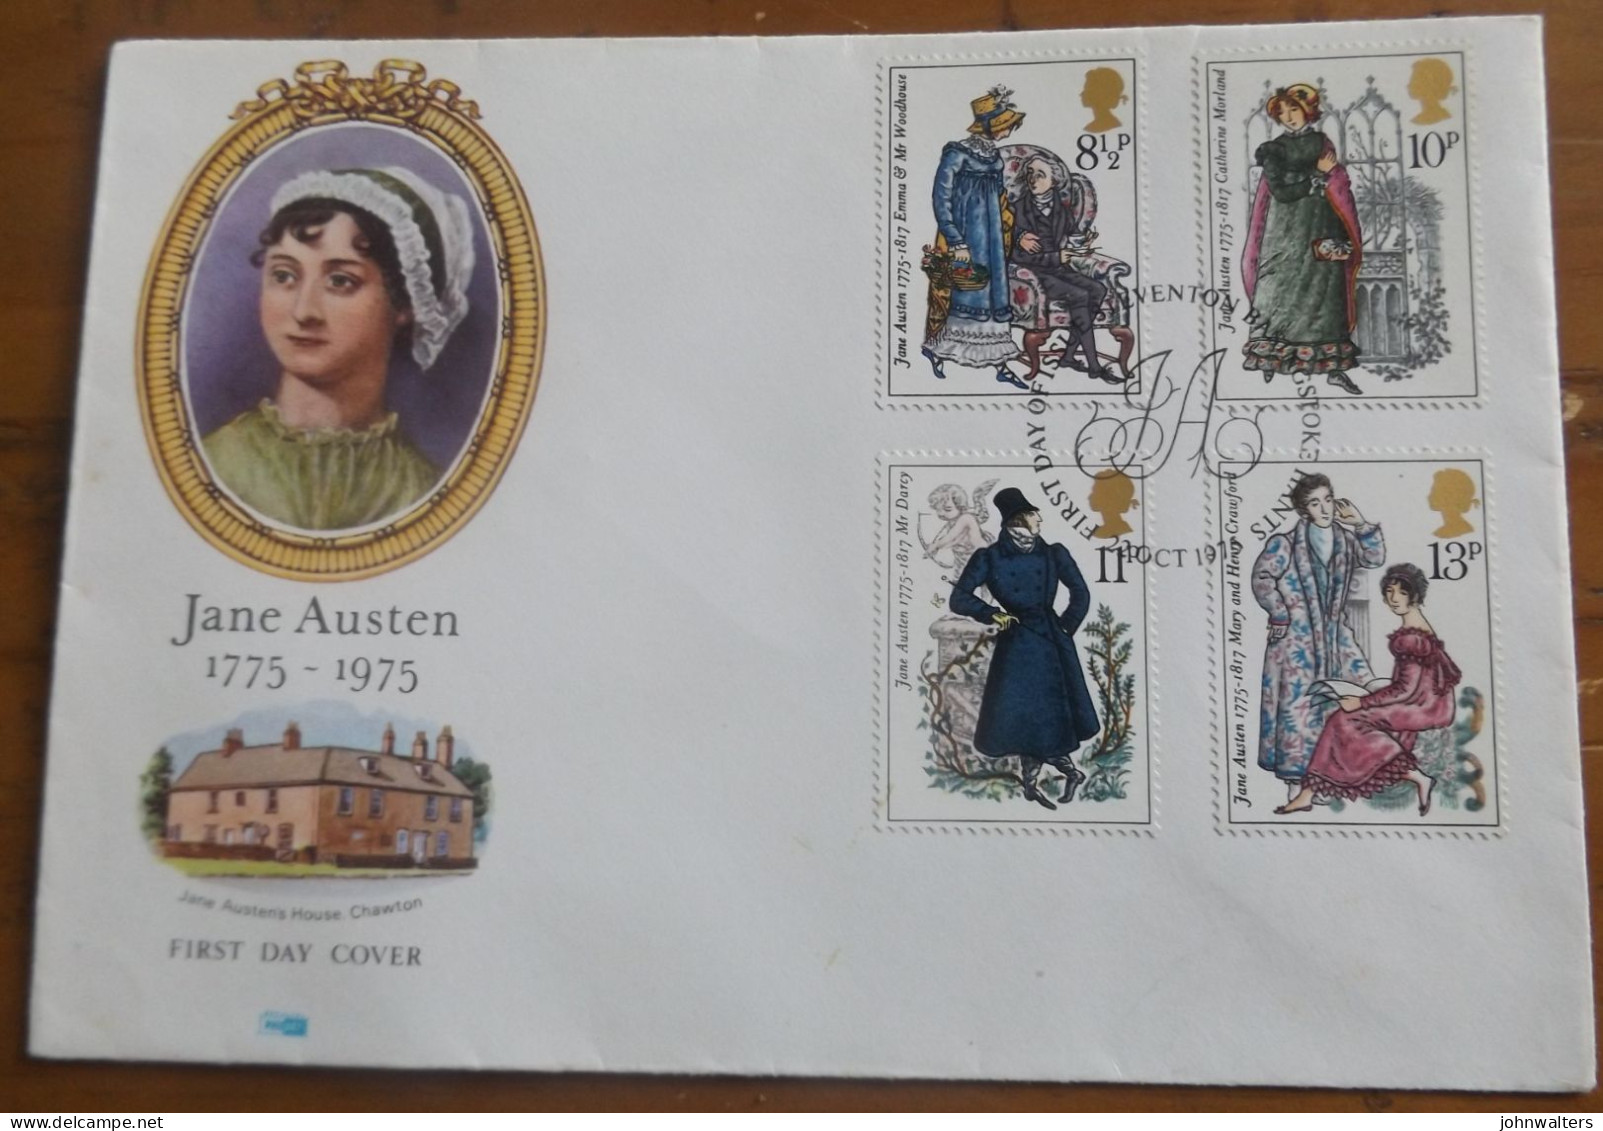 Jane Austen FDC 1795 -1975 Great Britain FDC Postmarked Steventon Basingstoke (birthplace ) 22 Nd Oct 1975 - 1971-1980 Decimal Issues